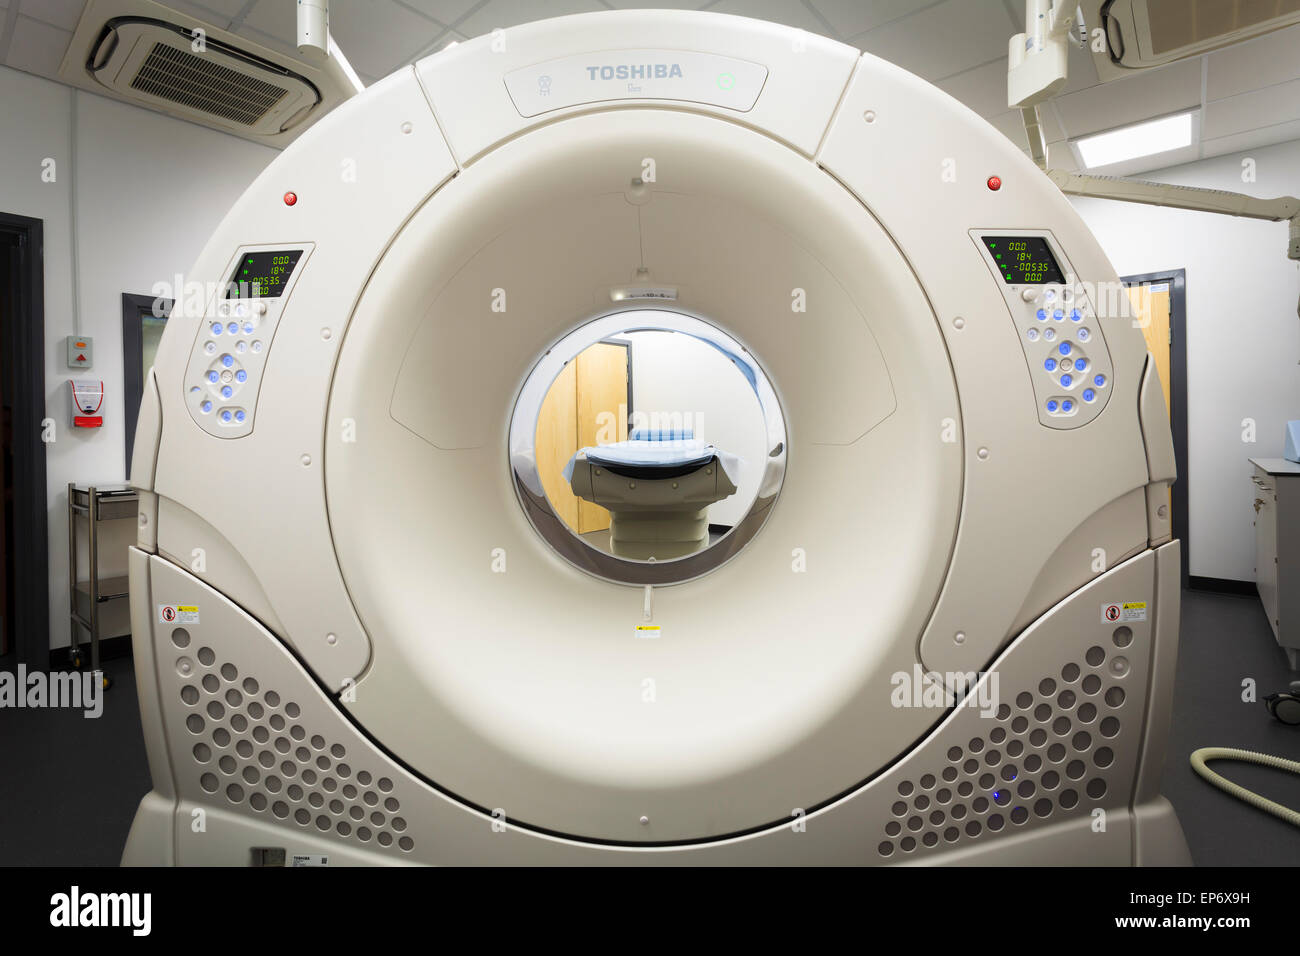 Scanner MRI Magnetic Resonance Imaging medico ospedaliere reparto di imaging in ospedale Foto Stock